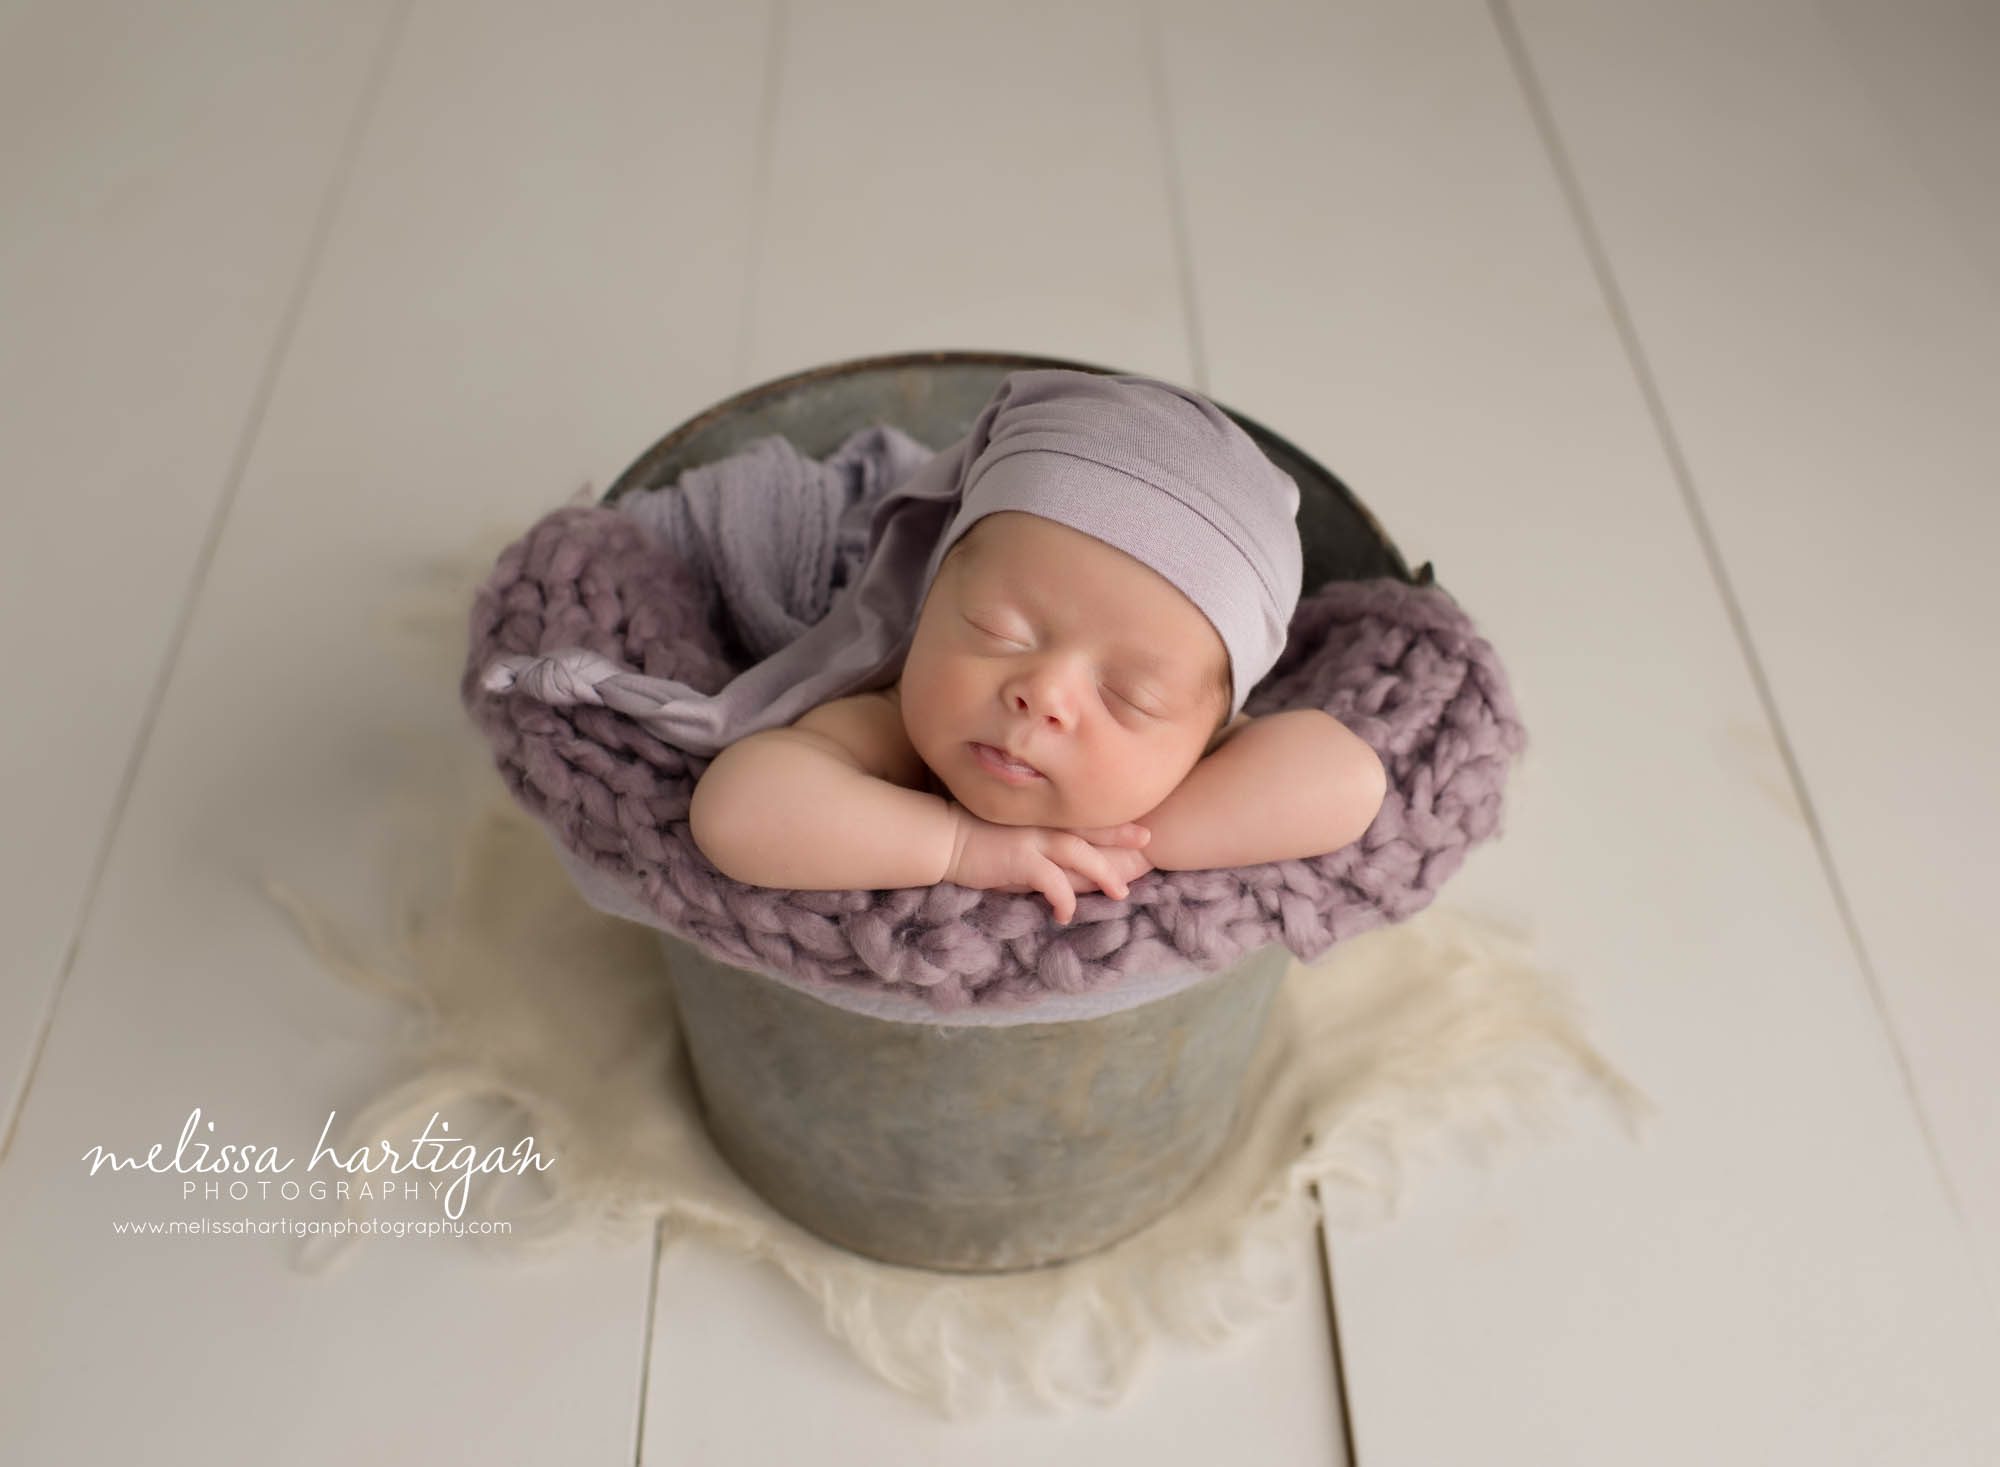 newborn baby girl posed in bucket wearing purple sleepy cap CT newborn photography